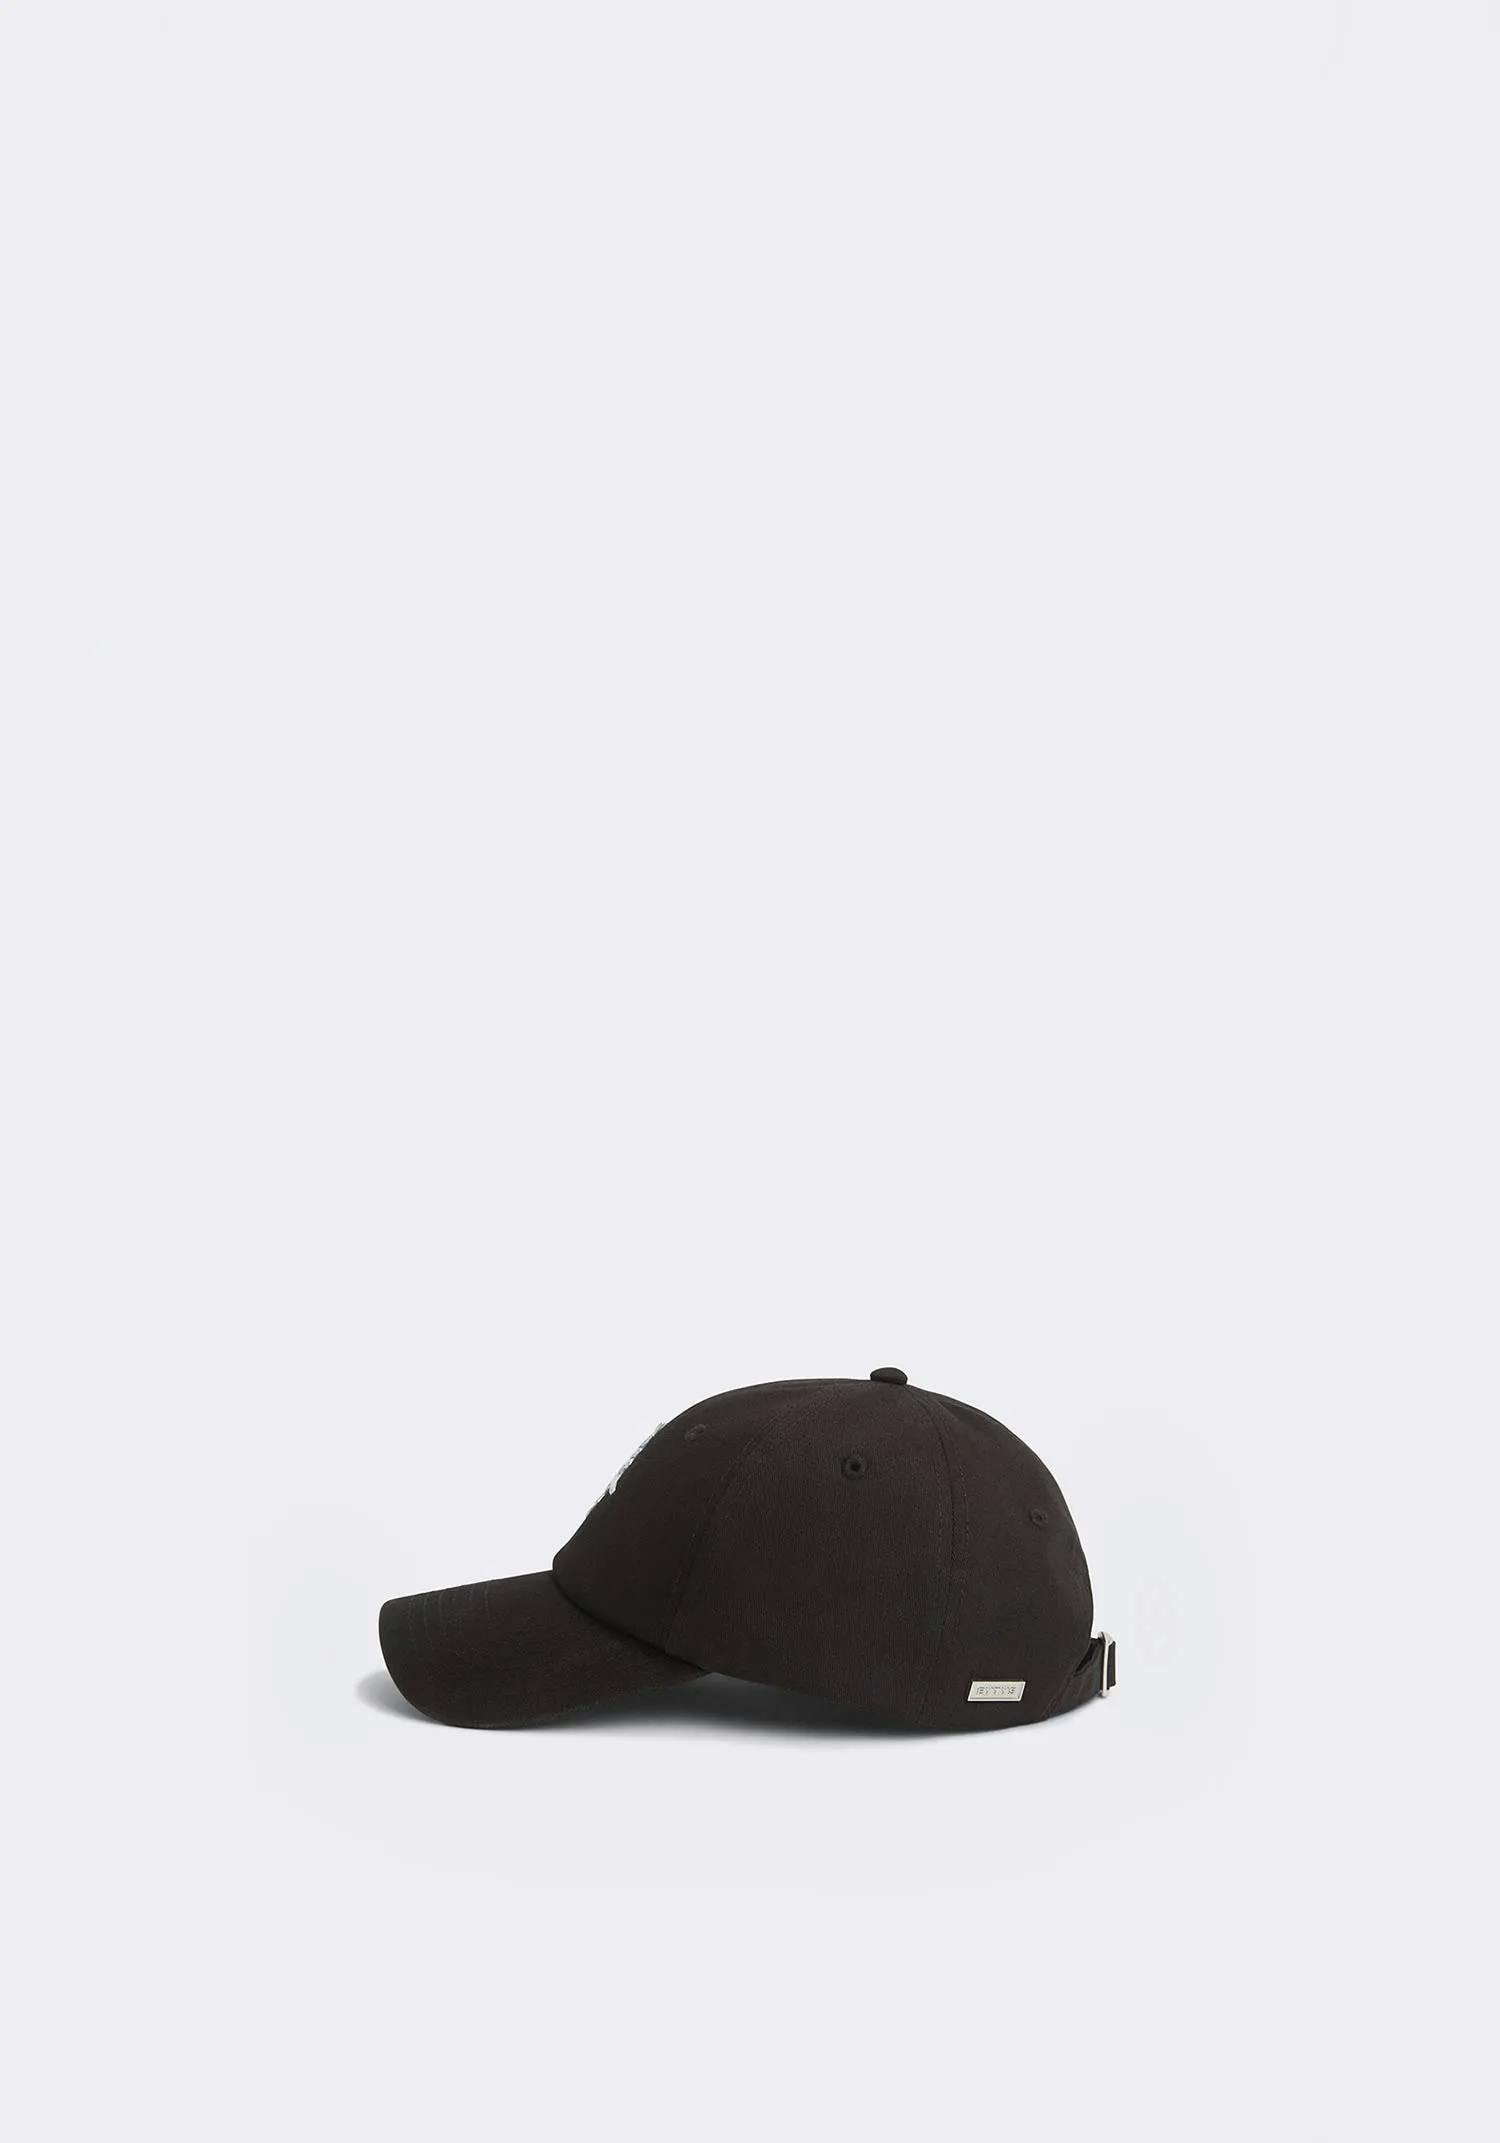 eytys lexi black splash キャップ ブラック 黒 hat